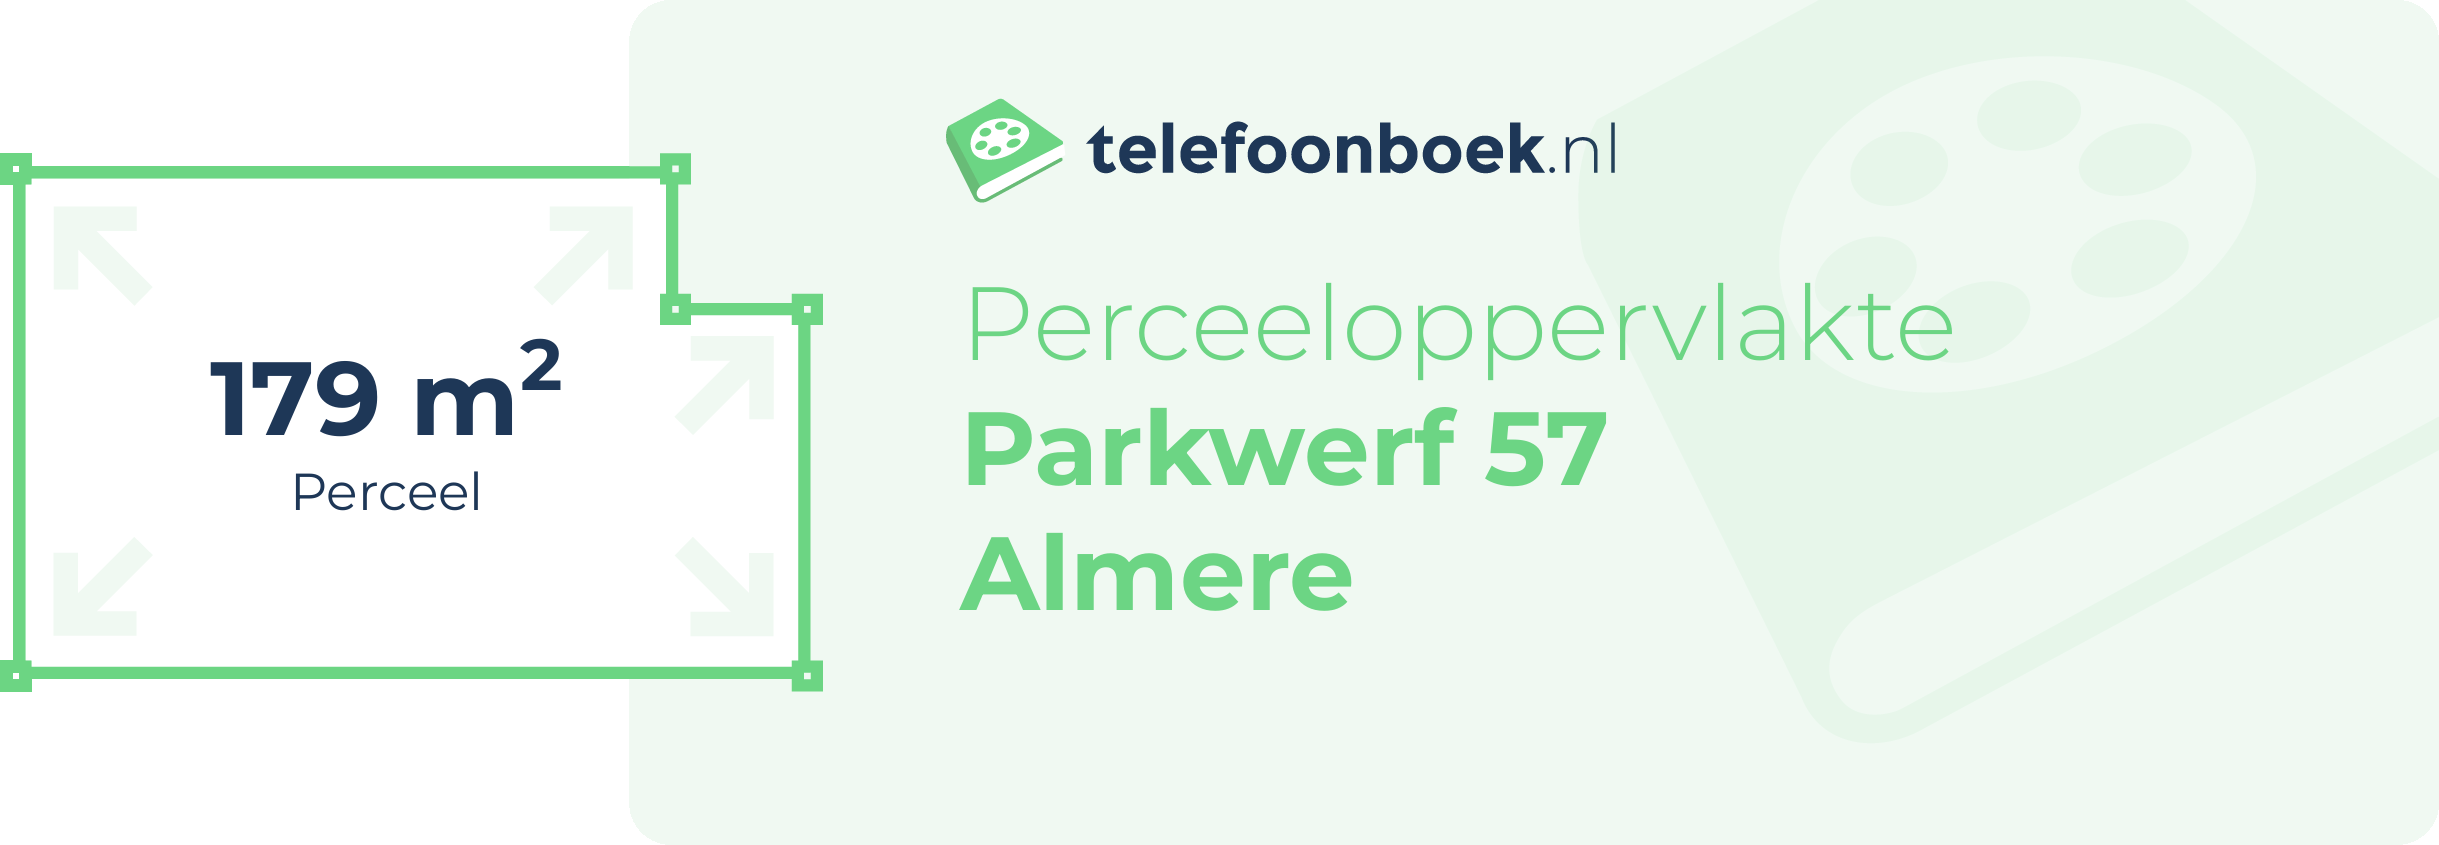 Perceeloppervlakte Parkwerf 57 Almere